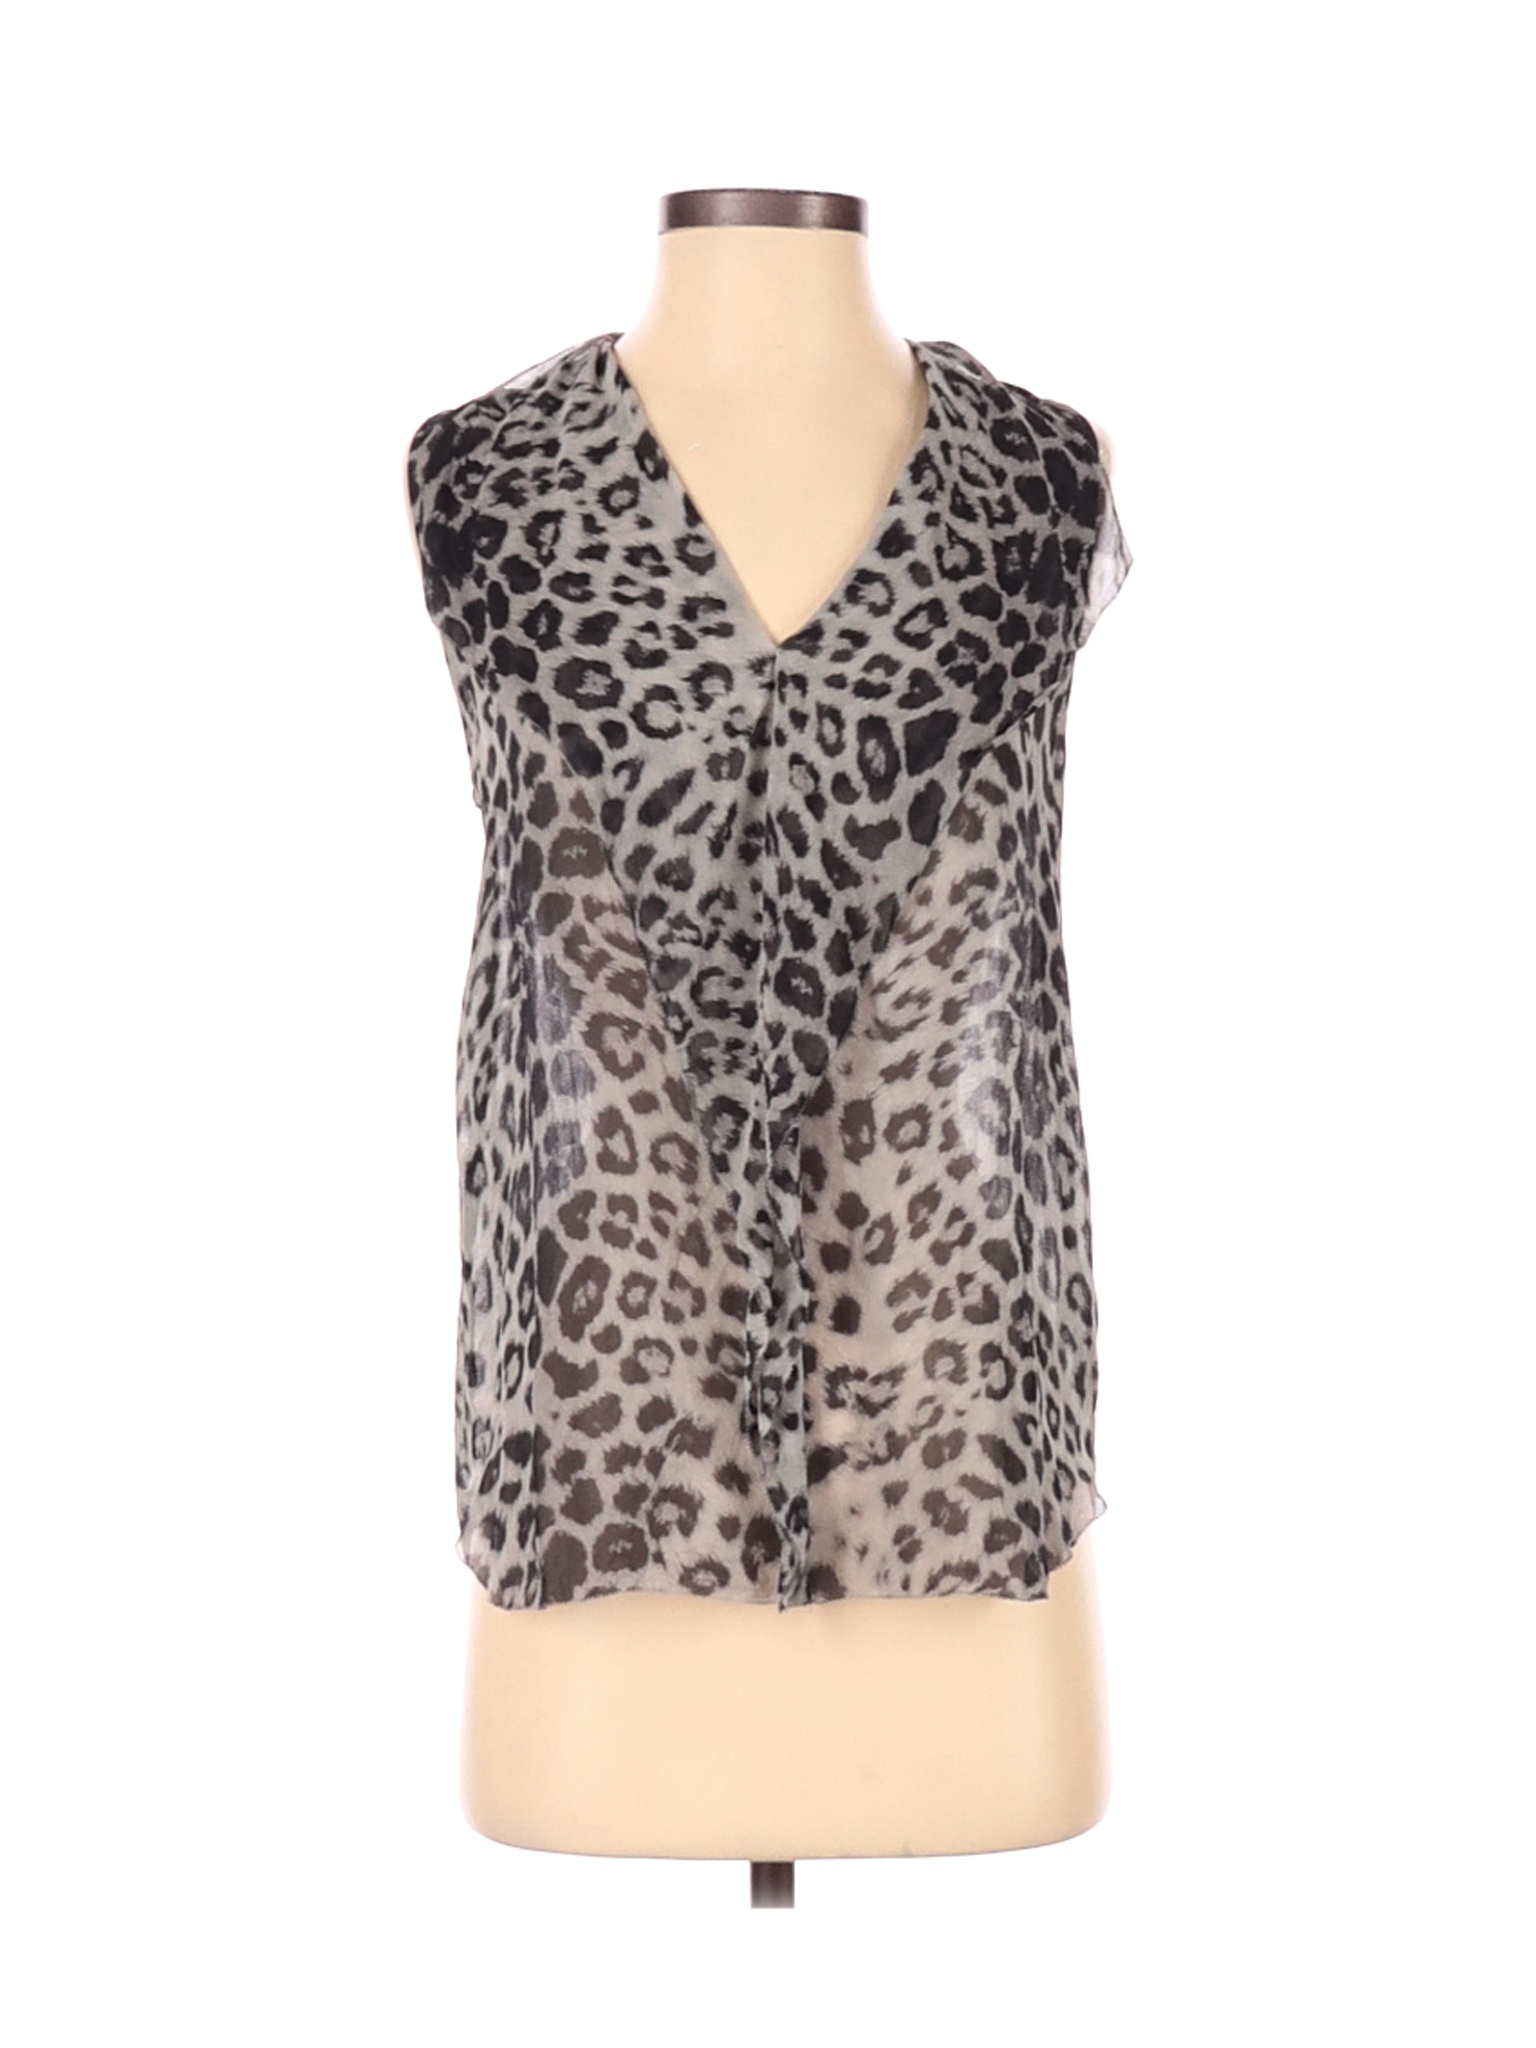 T. Babaton Women Gray Short Sleeve Silk Top S | eBay